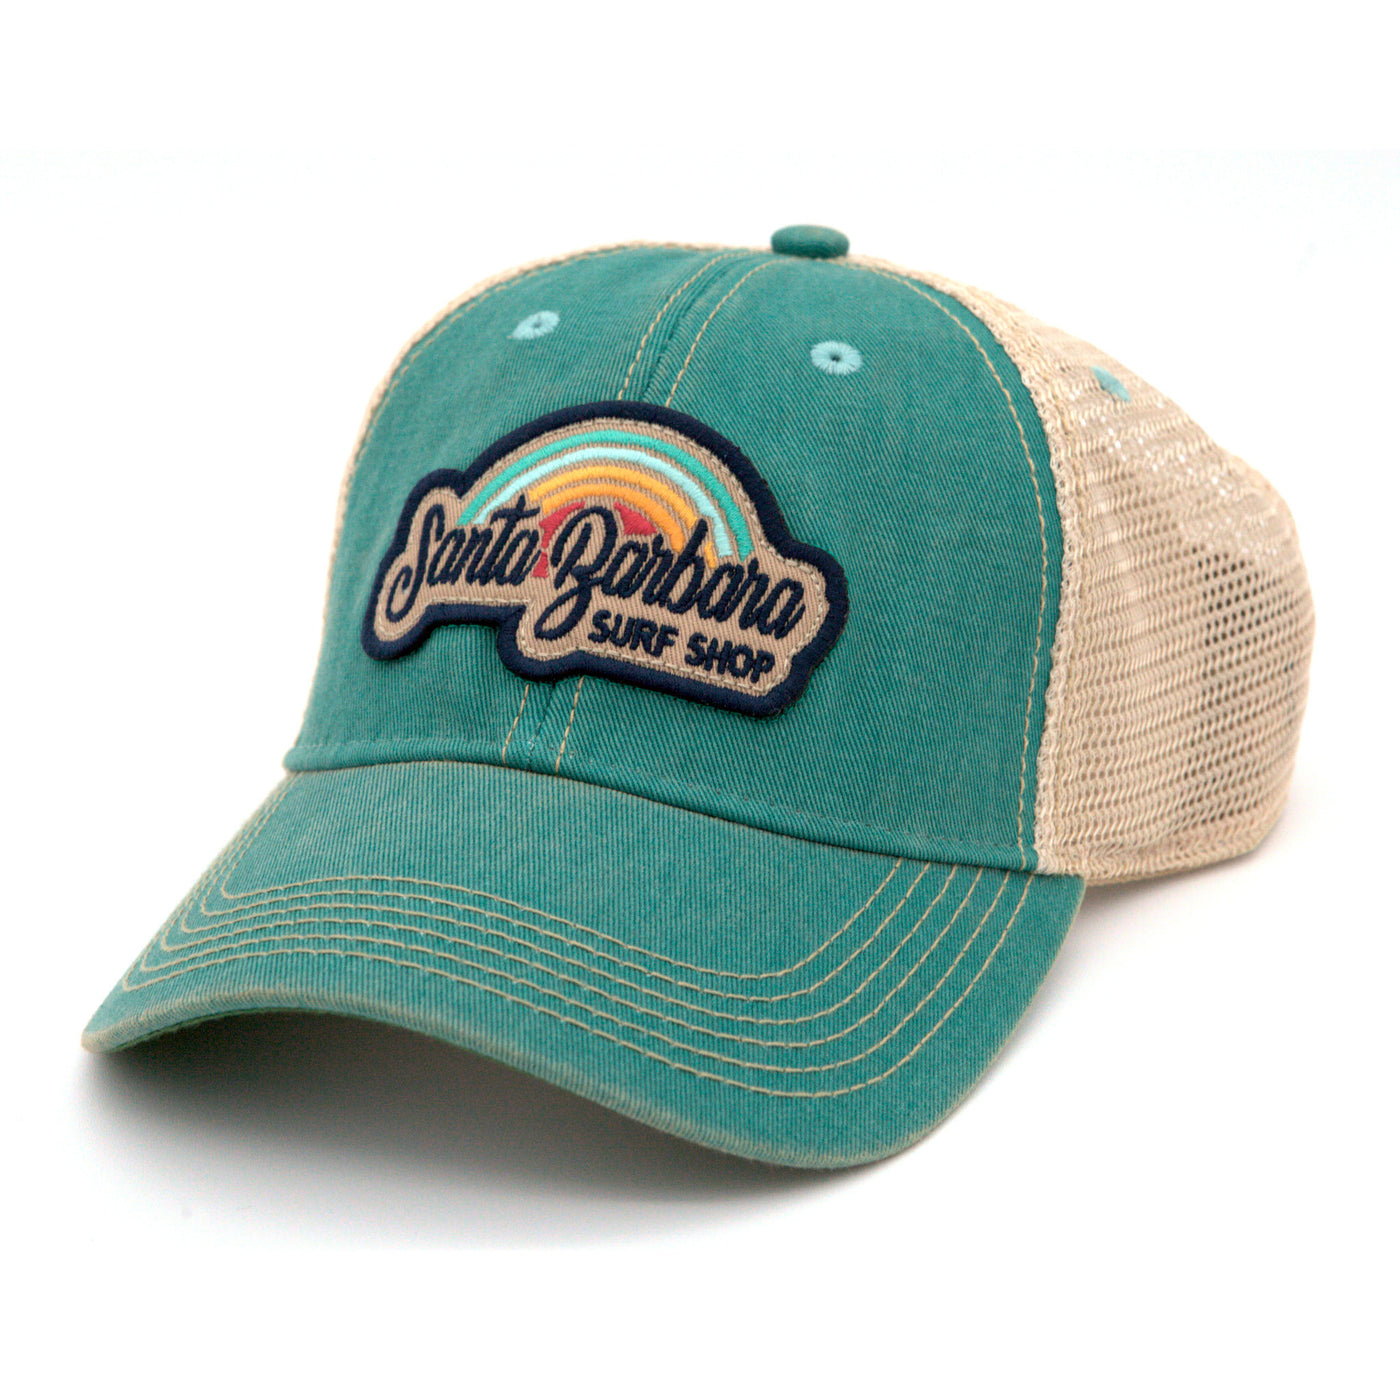 Santa Barbara Surf Shop Rainbow Trucker Hat